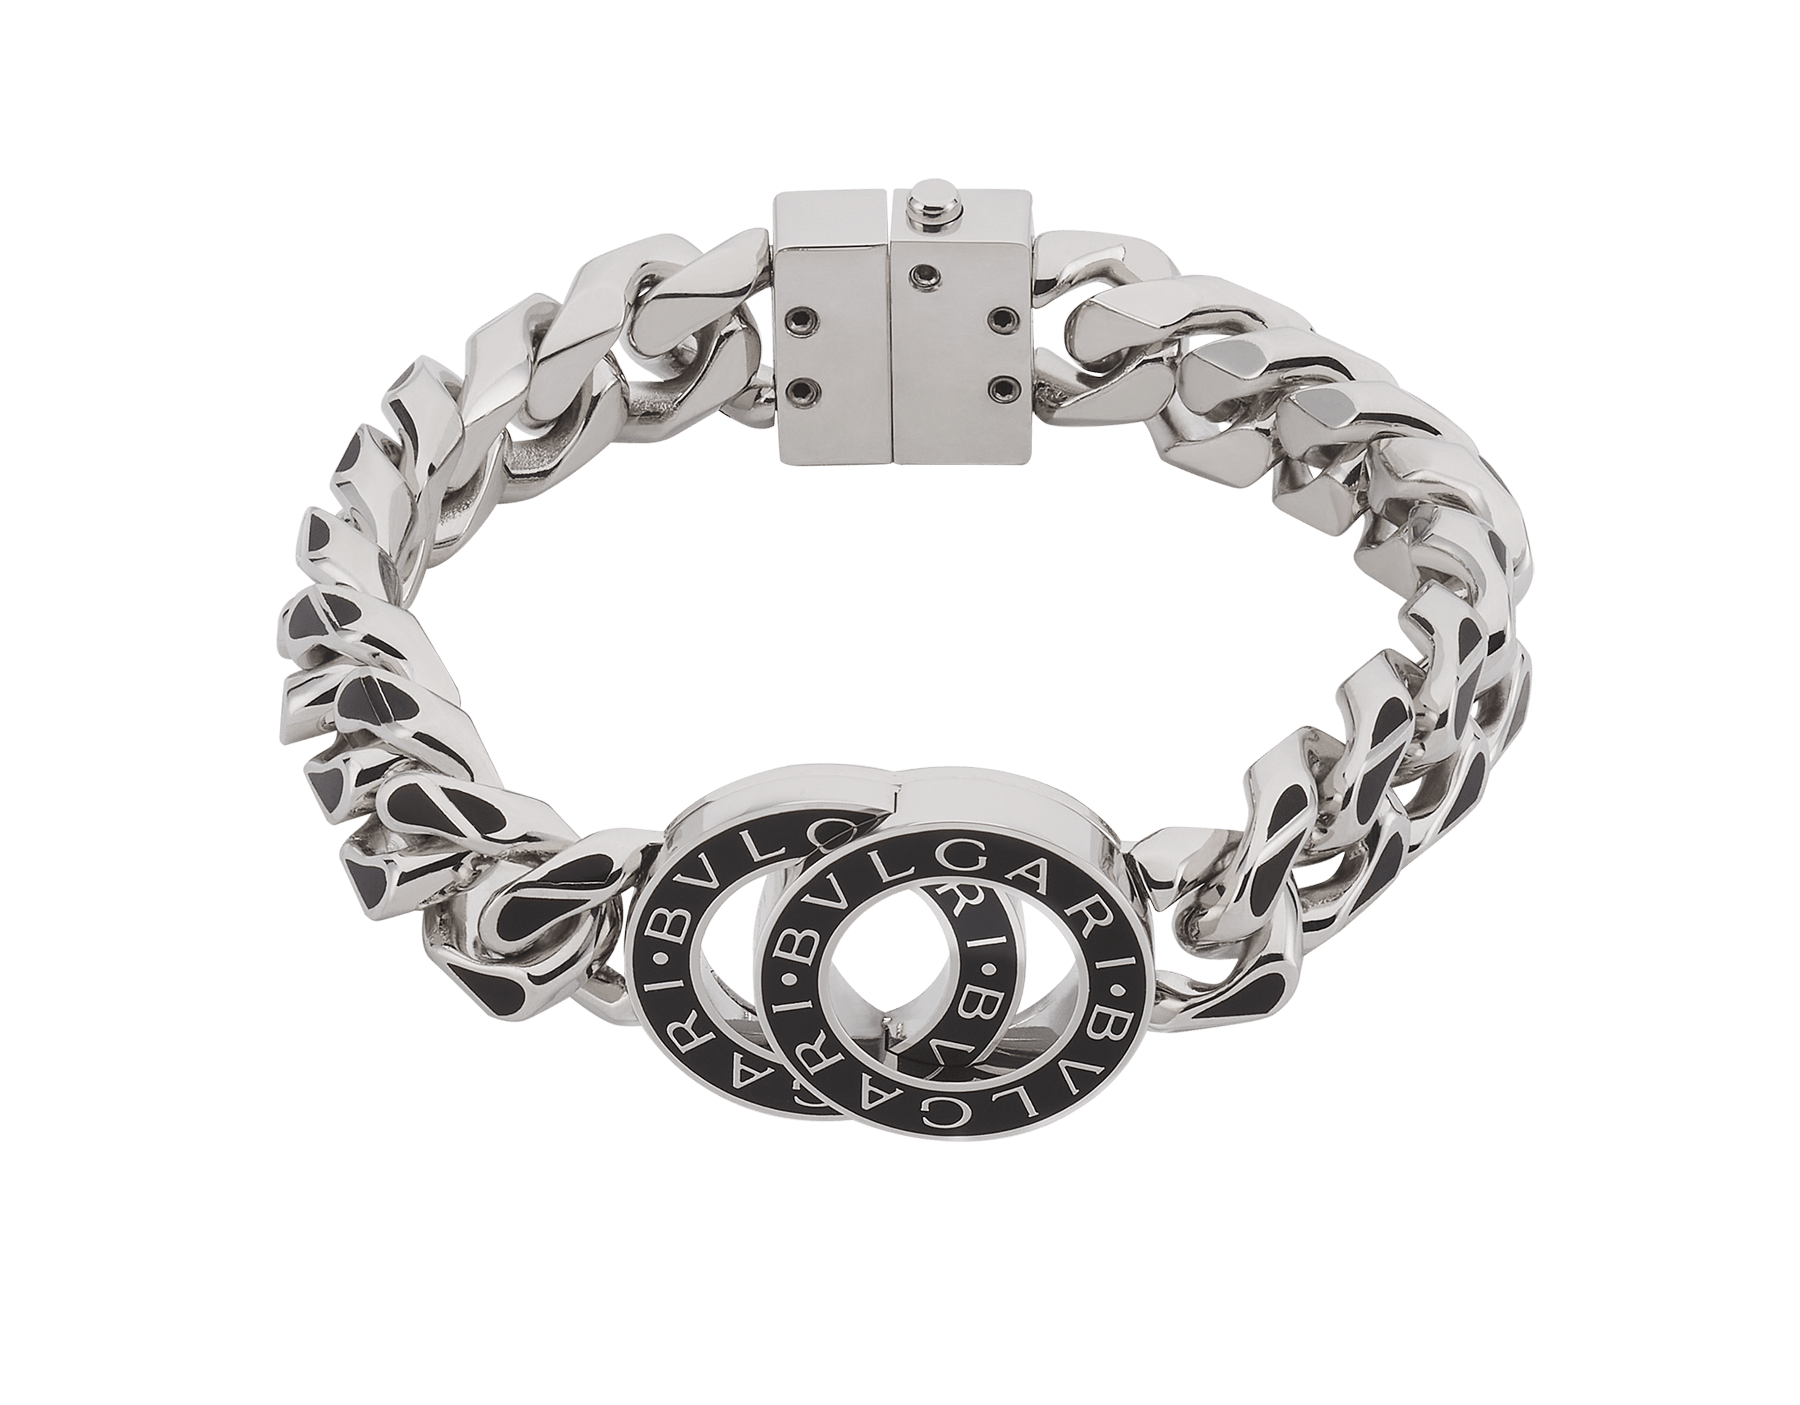 BULGARI BULGARI Maxi Chain bracelet in palladium-plated brass with black enamel inserts. Iconic décor enamelled in black, and clasp closure. BB-CHUNKY-MC-B image 1